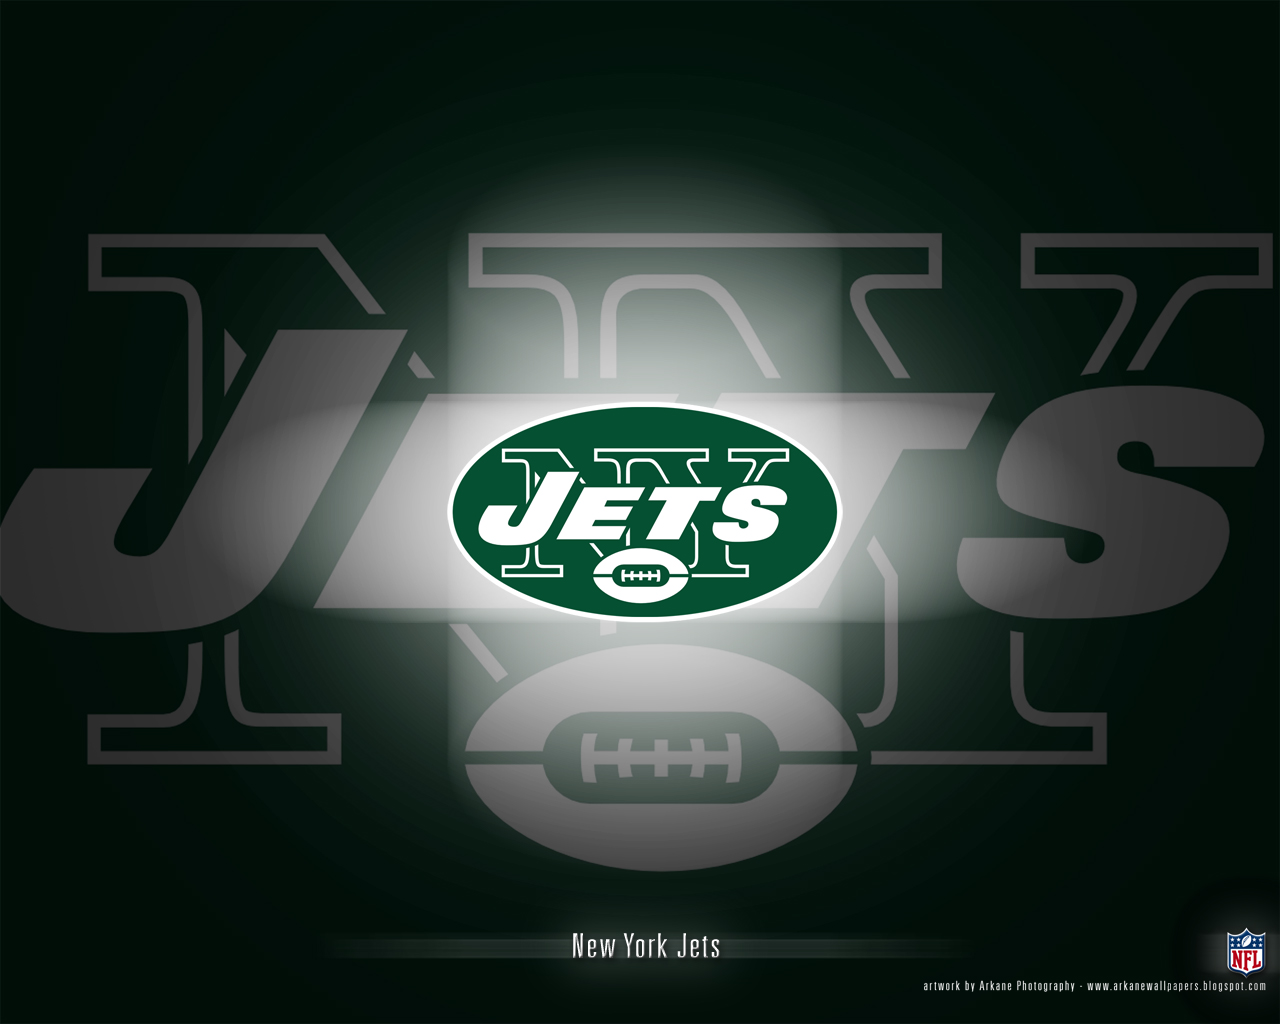 Download New York Jets wallpaper New York Jets 3D   Ecro